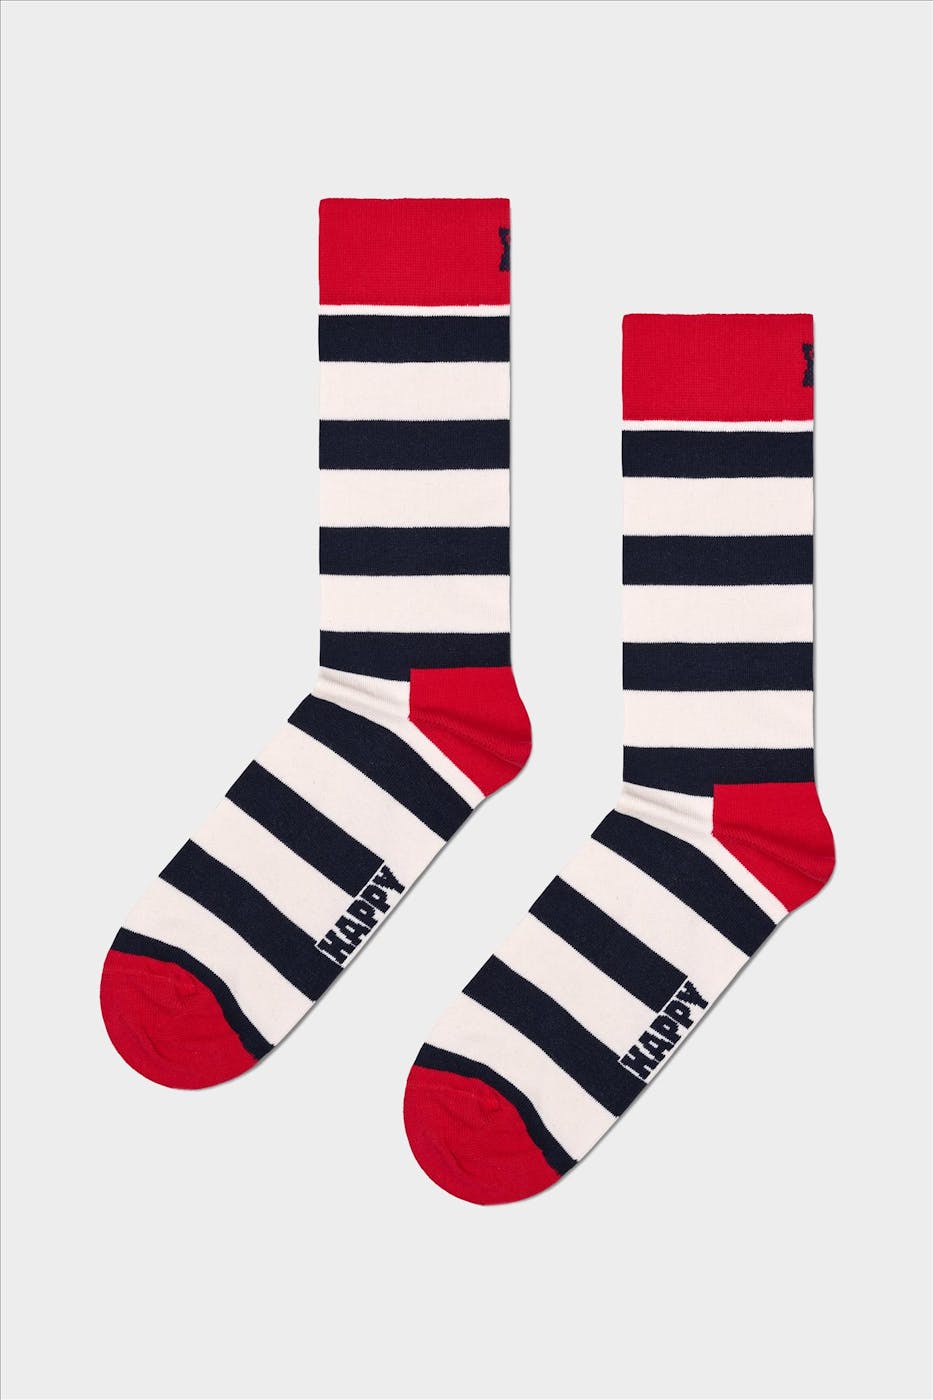 Happy Socks - Ecru-blauw-rode Classic Navy Socks Gift Set 4-Pack, maat: 41-46